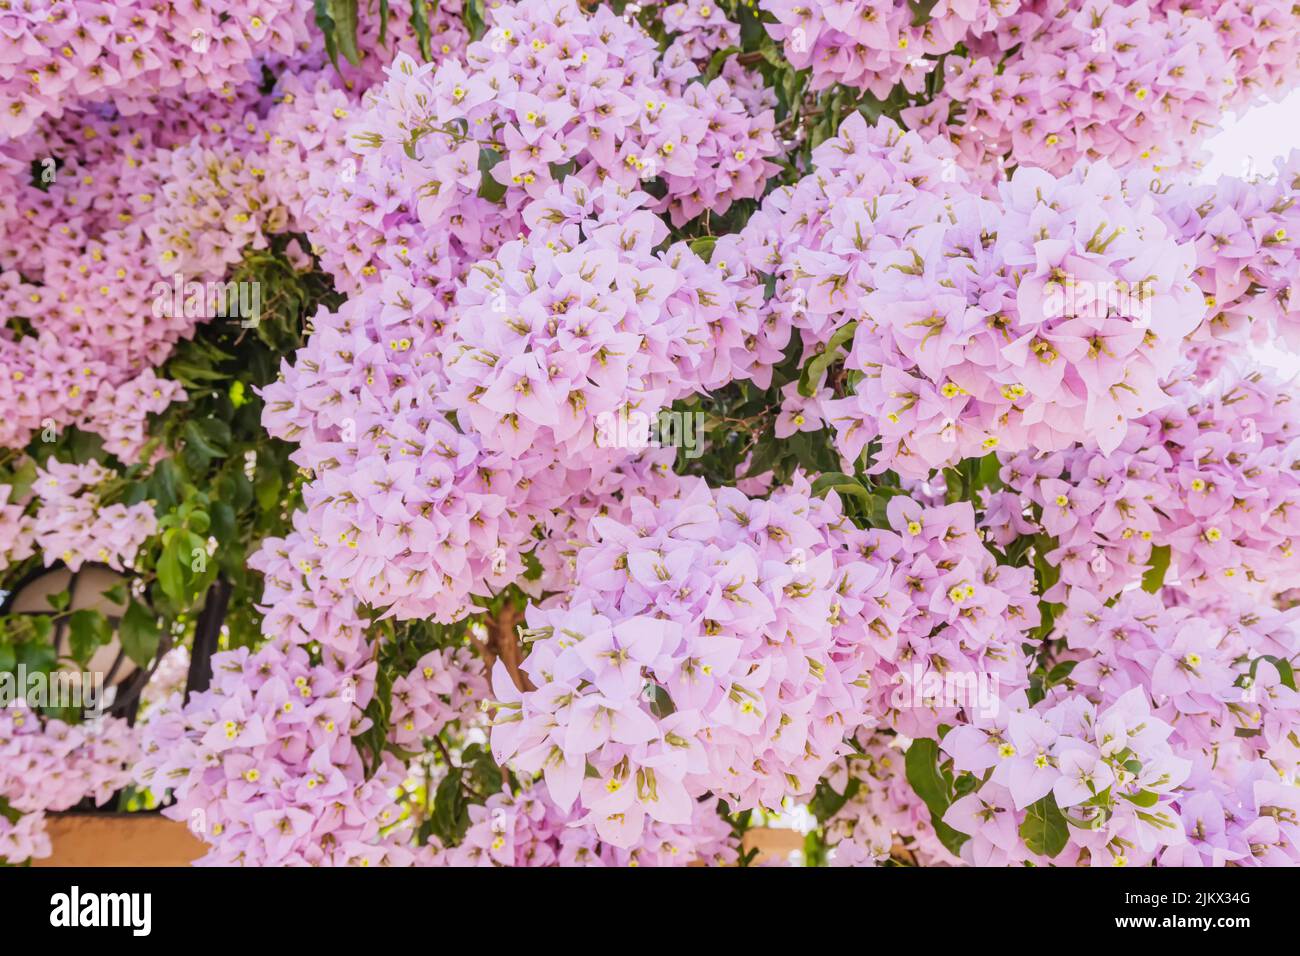 bougainvillea in bloom close-up. A popular plant for decorative purposes Stock Photo